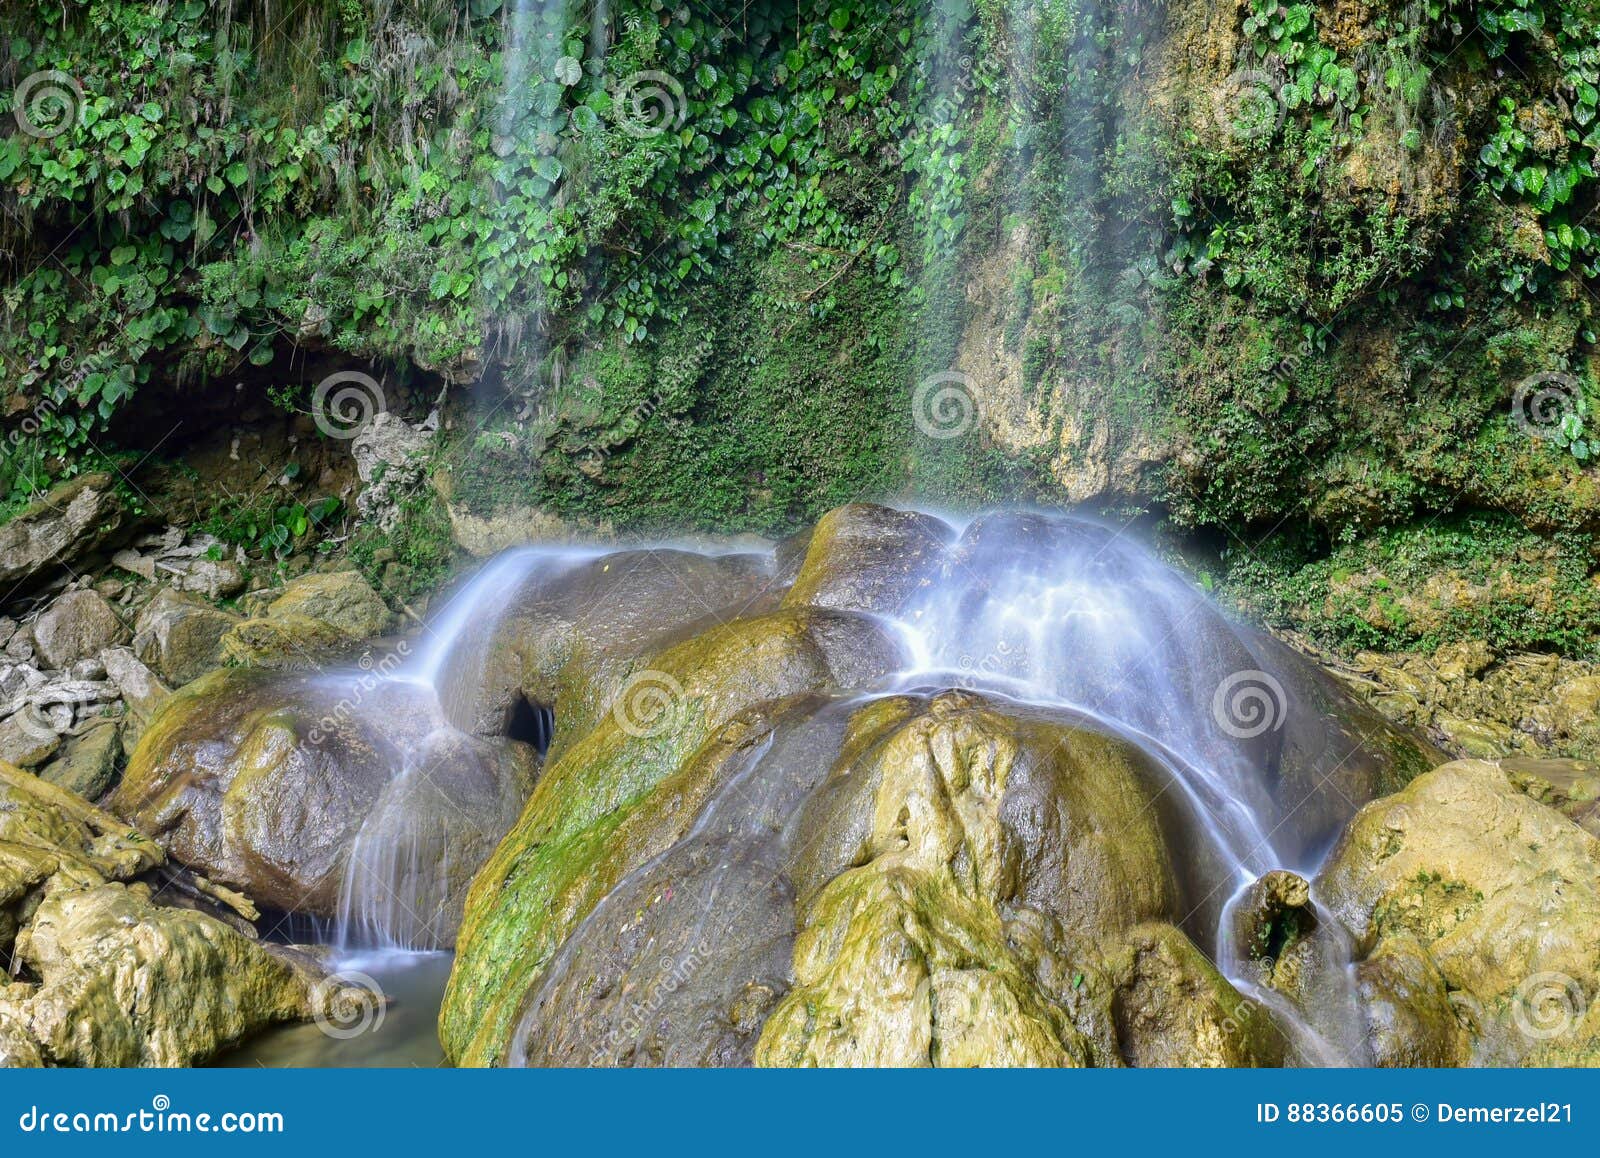 soroa waterfall - pinar del rio, cuba